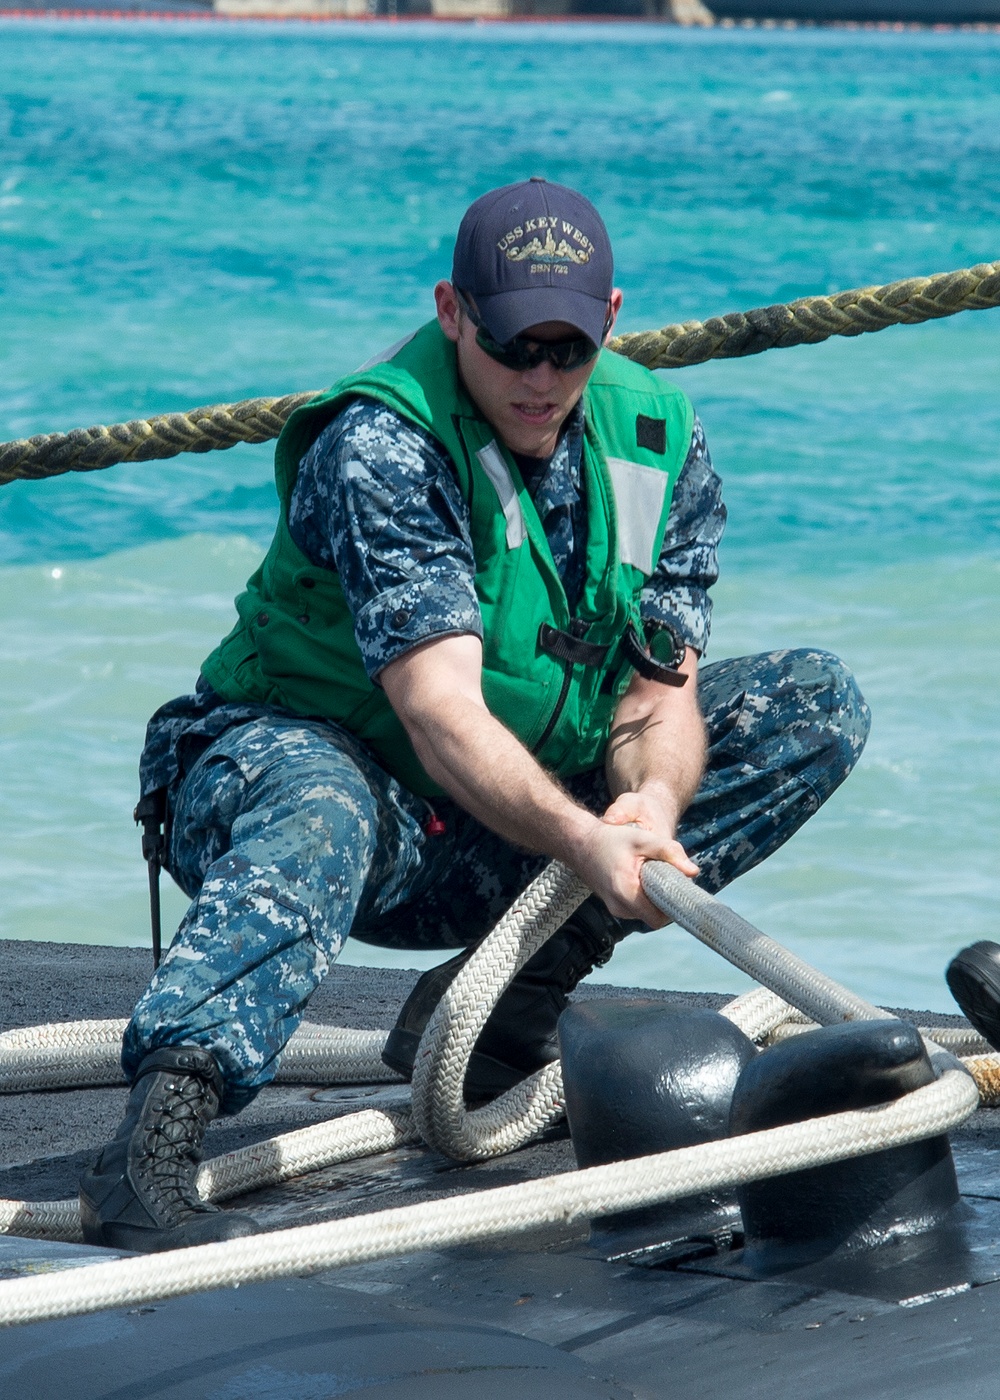 Line Handling during USS Key West Return to Guam Dec. 15